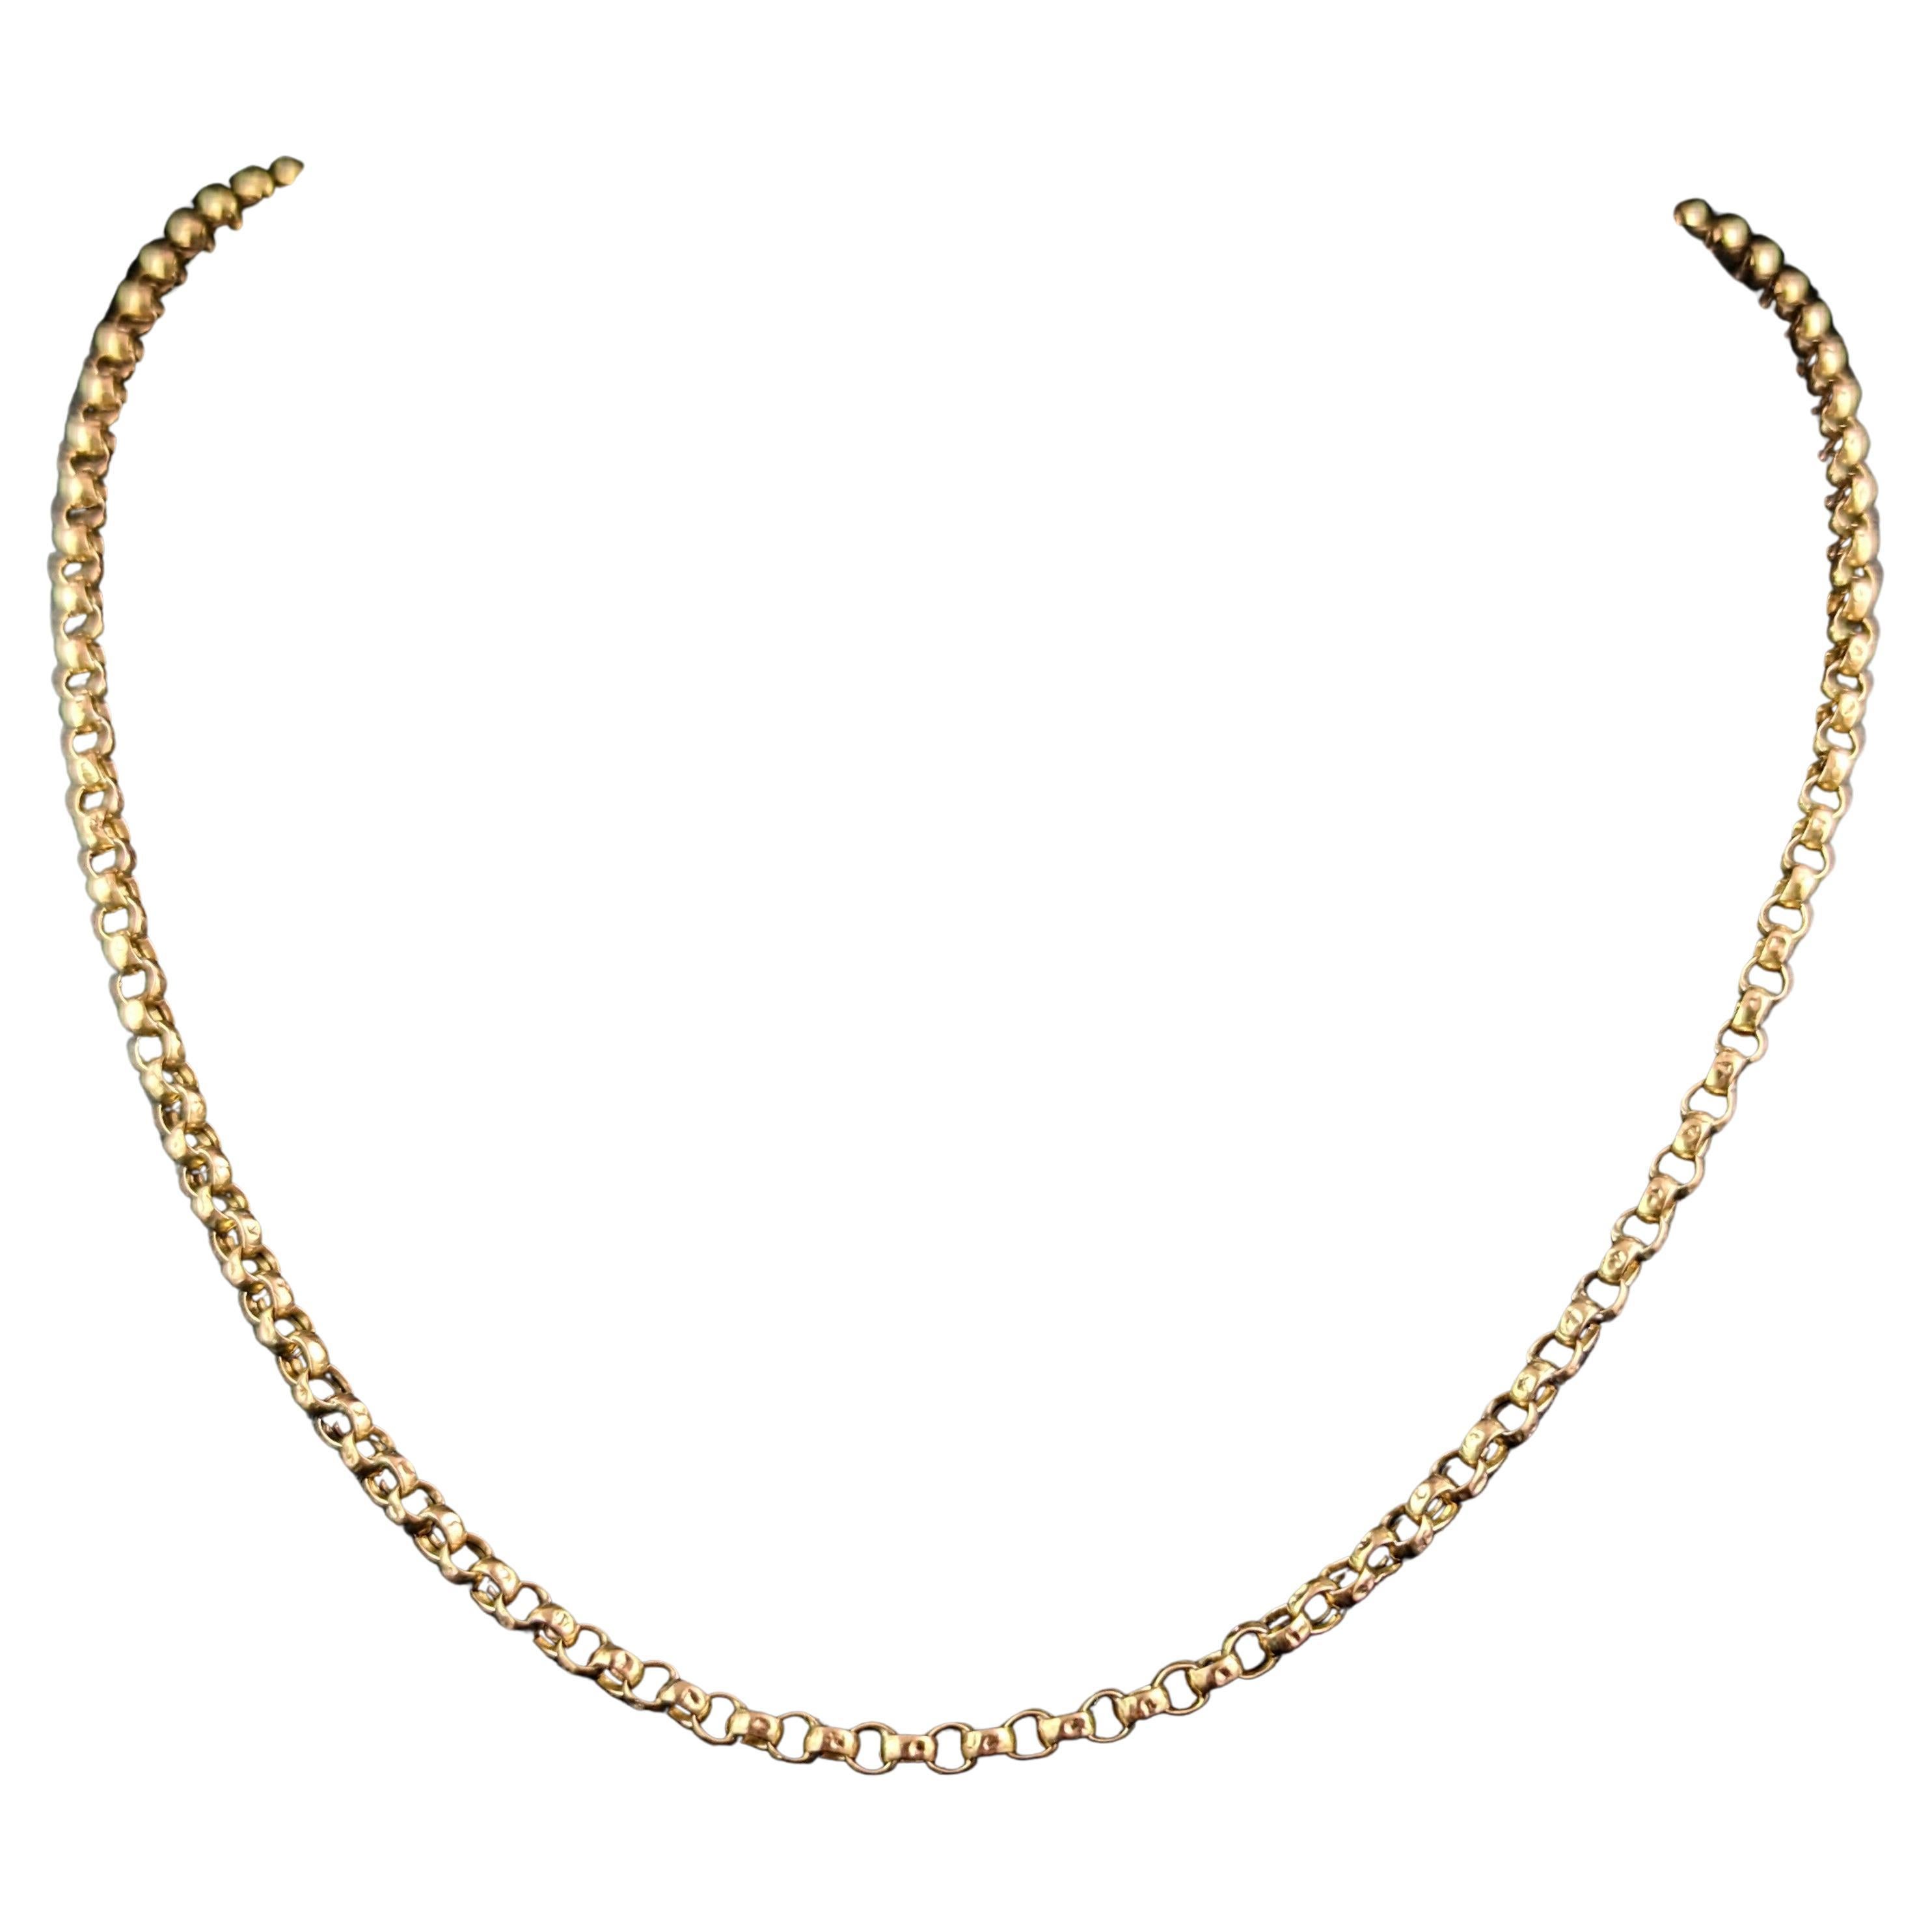 Antique 9k gold rolo link chain necklace, Edwardian 